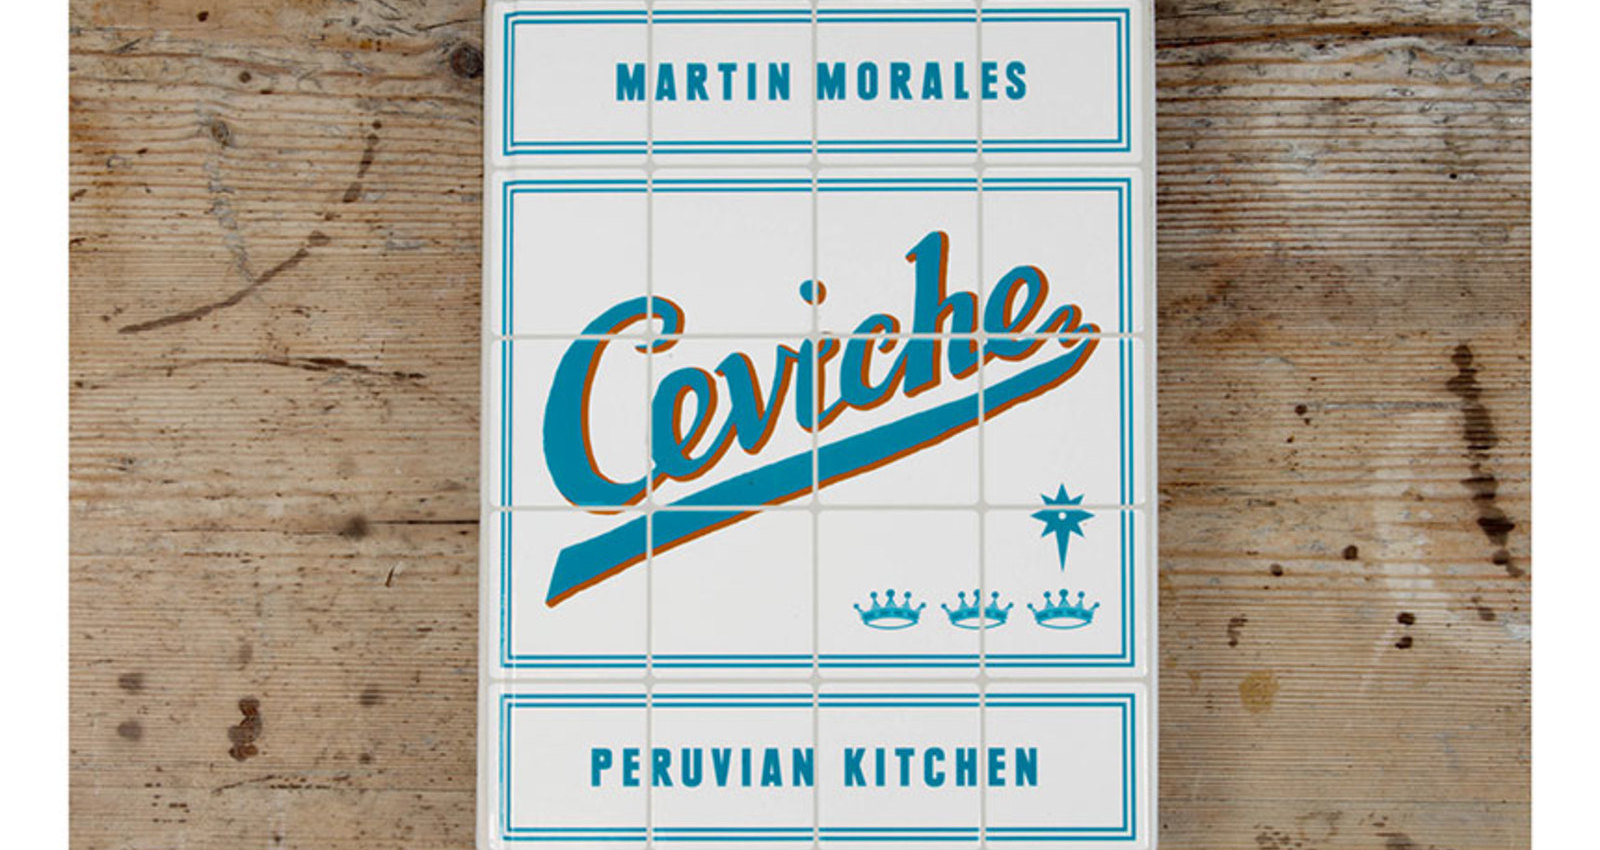 Ceviche - Peruvian Kitchen